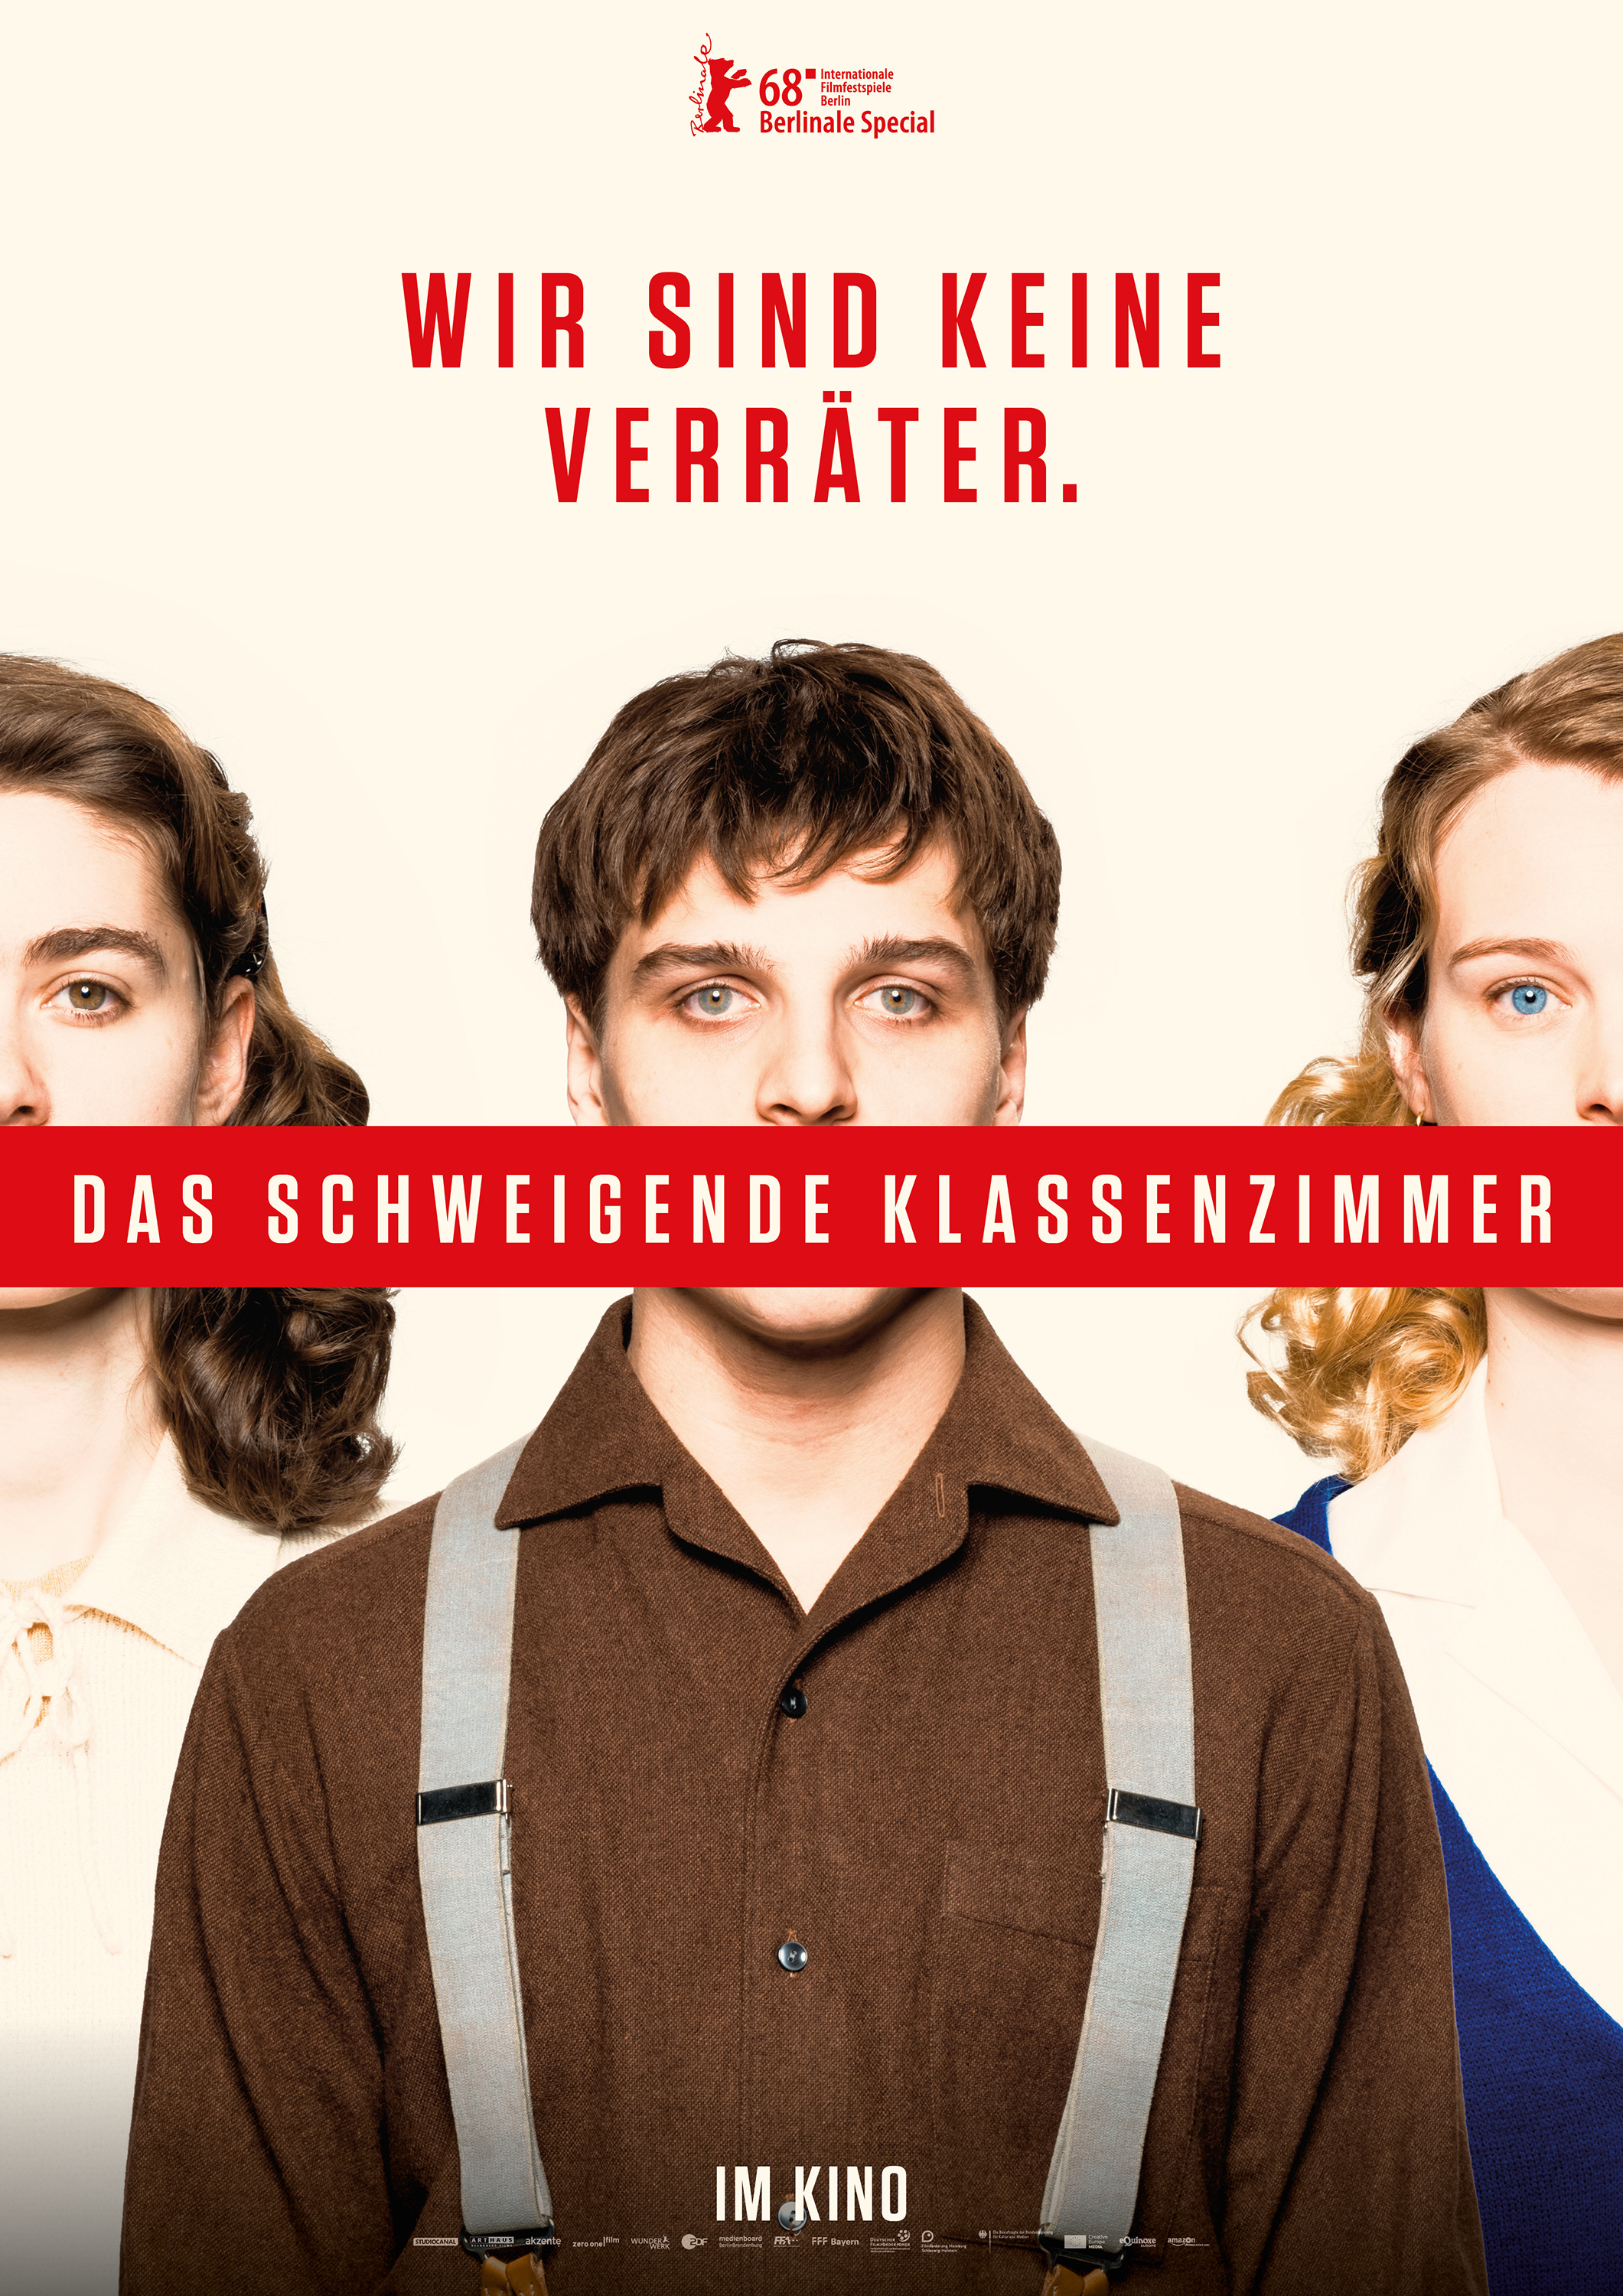 Mega Sized Movie Poster Image for Das schweigende Klassenzimmer (#6 of 7)